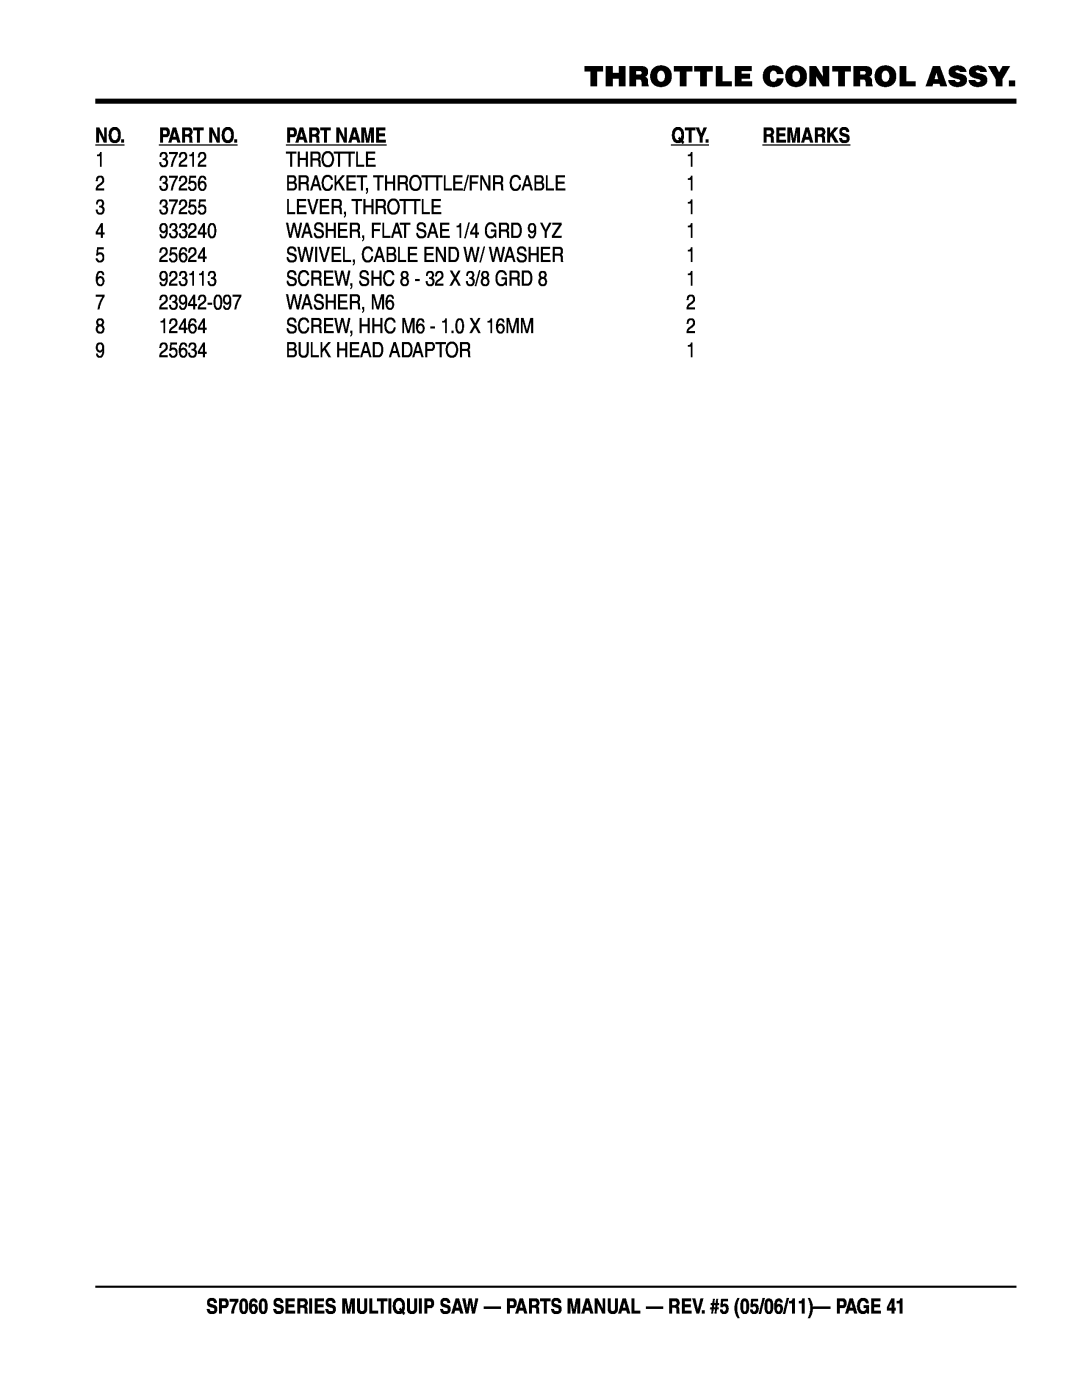 Multiquip SP706036 throttle control assy, Part Name, SP7060 SERIES MULTIQUIP SAW - PARTS MANUAL - REV. #5 05/06/11- PAGE 